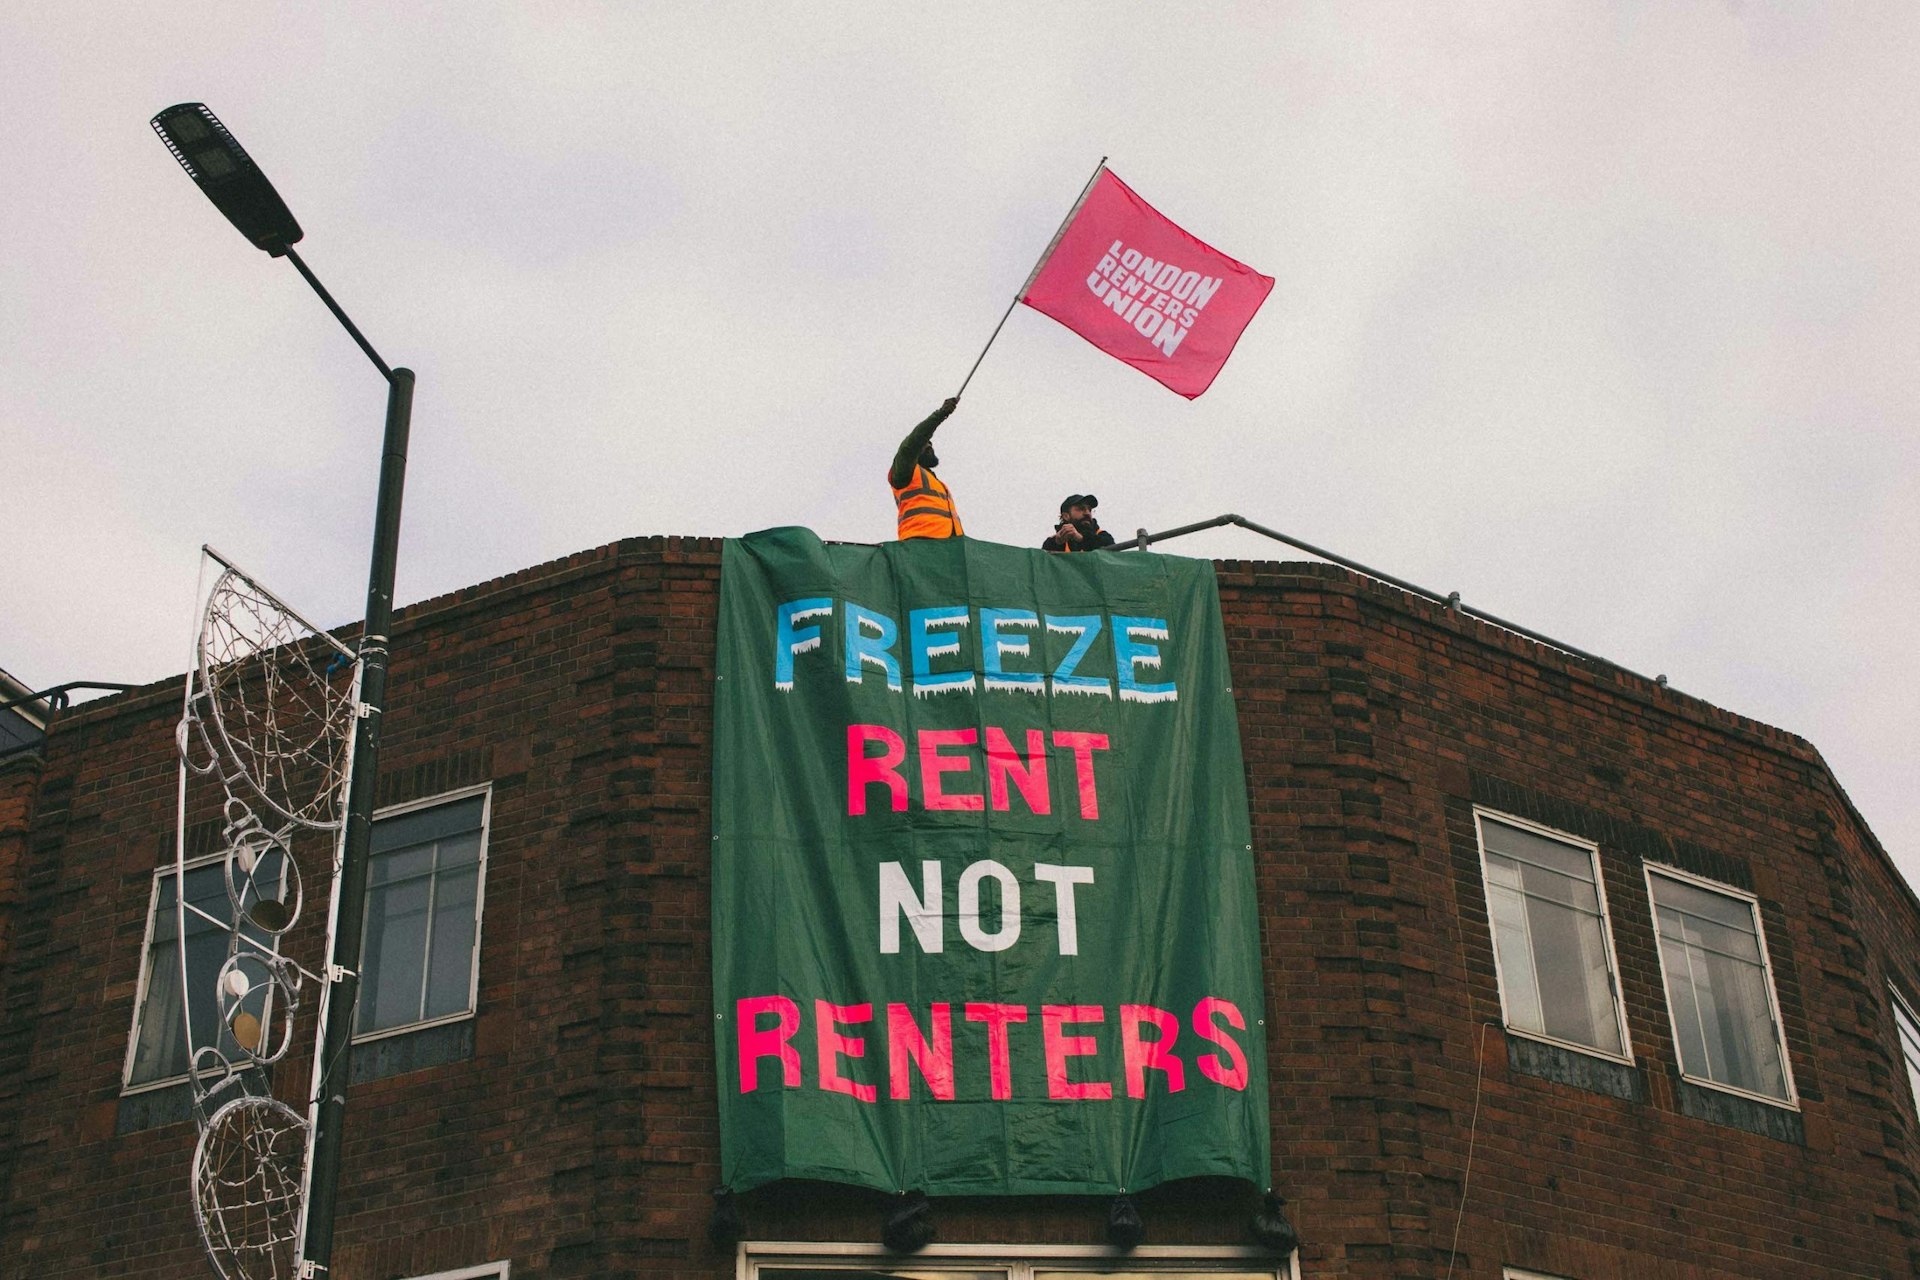 Tenants, unions and politicians back calls for a rent freeze